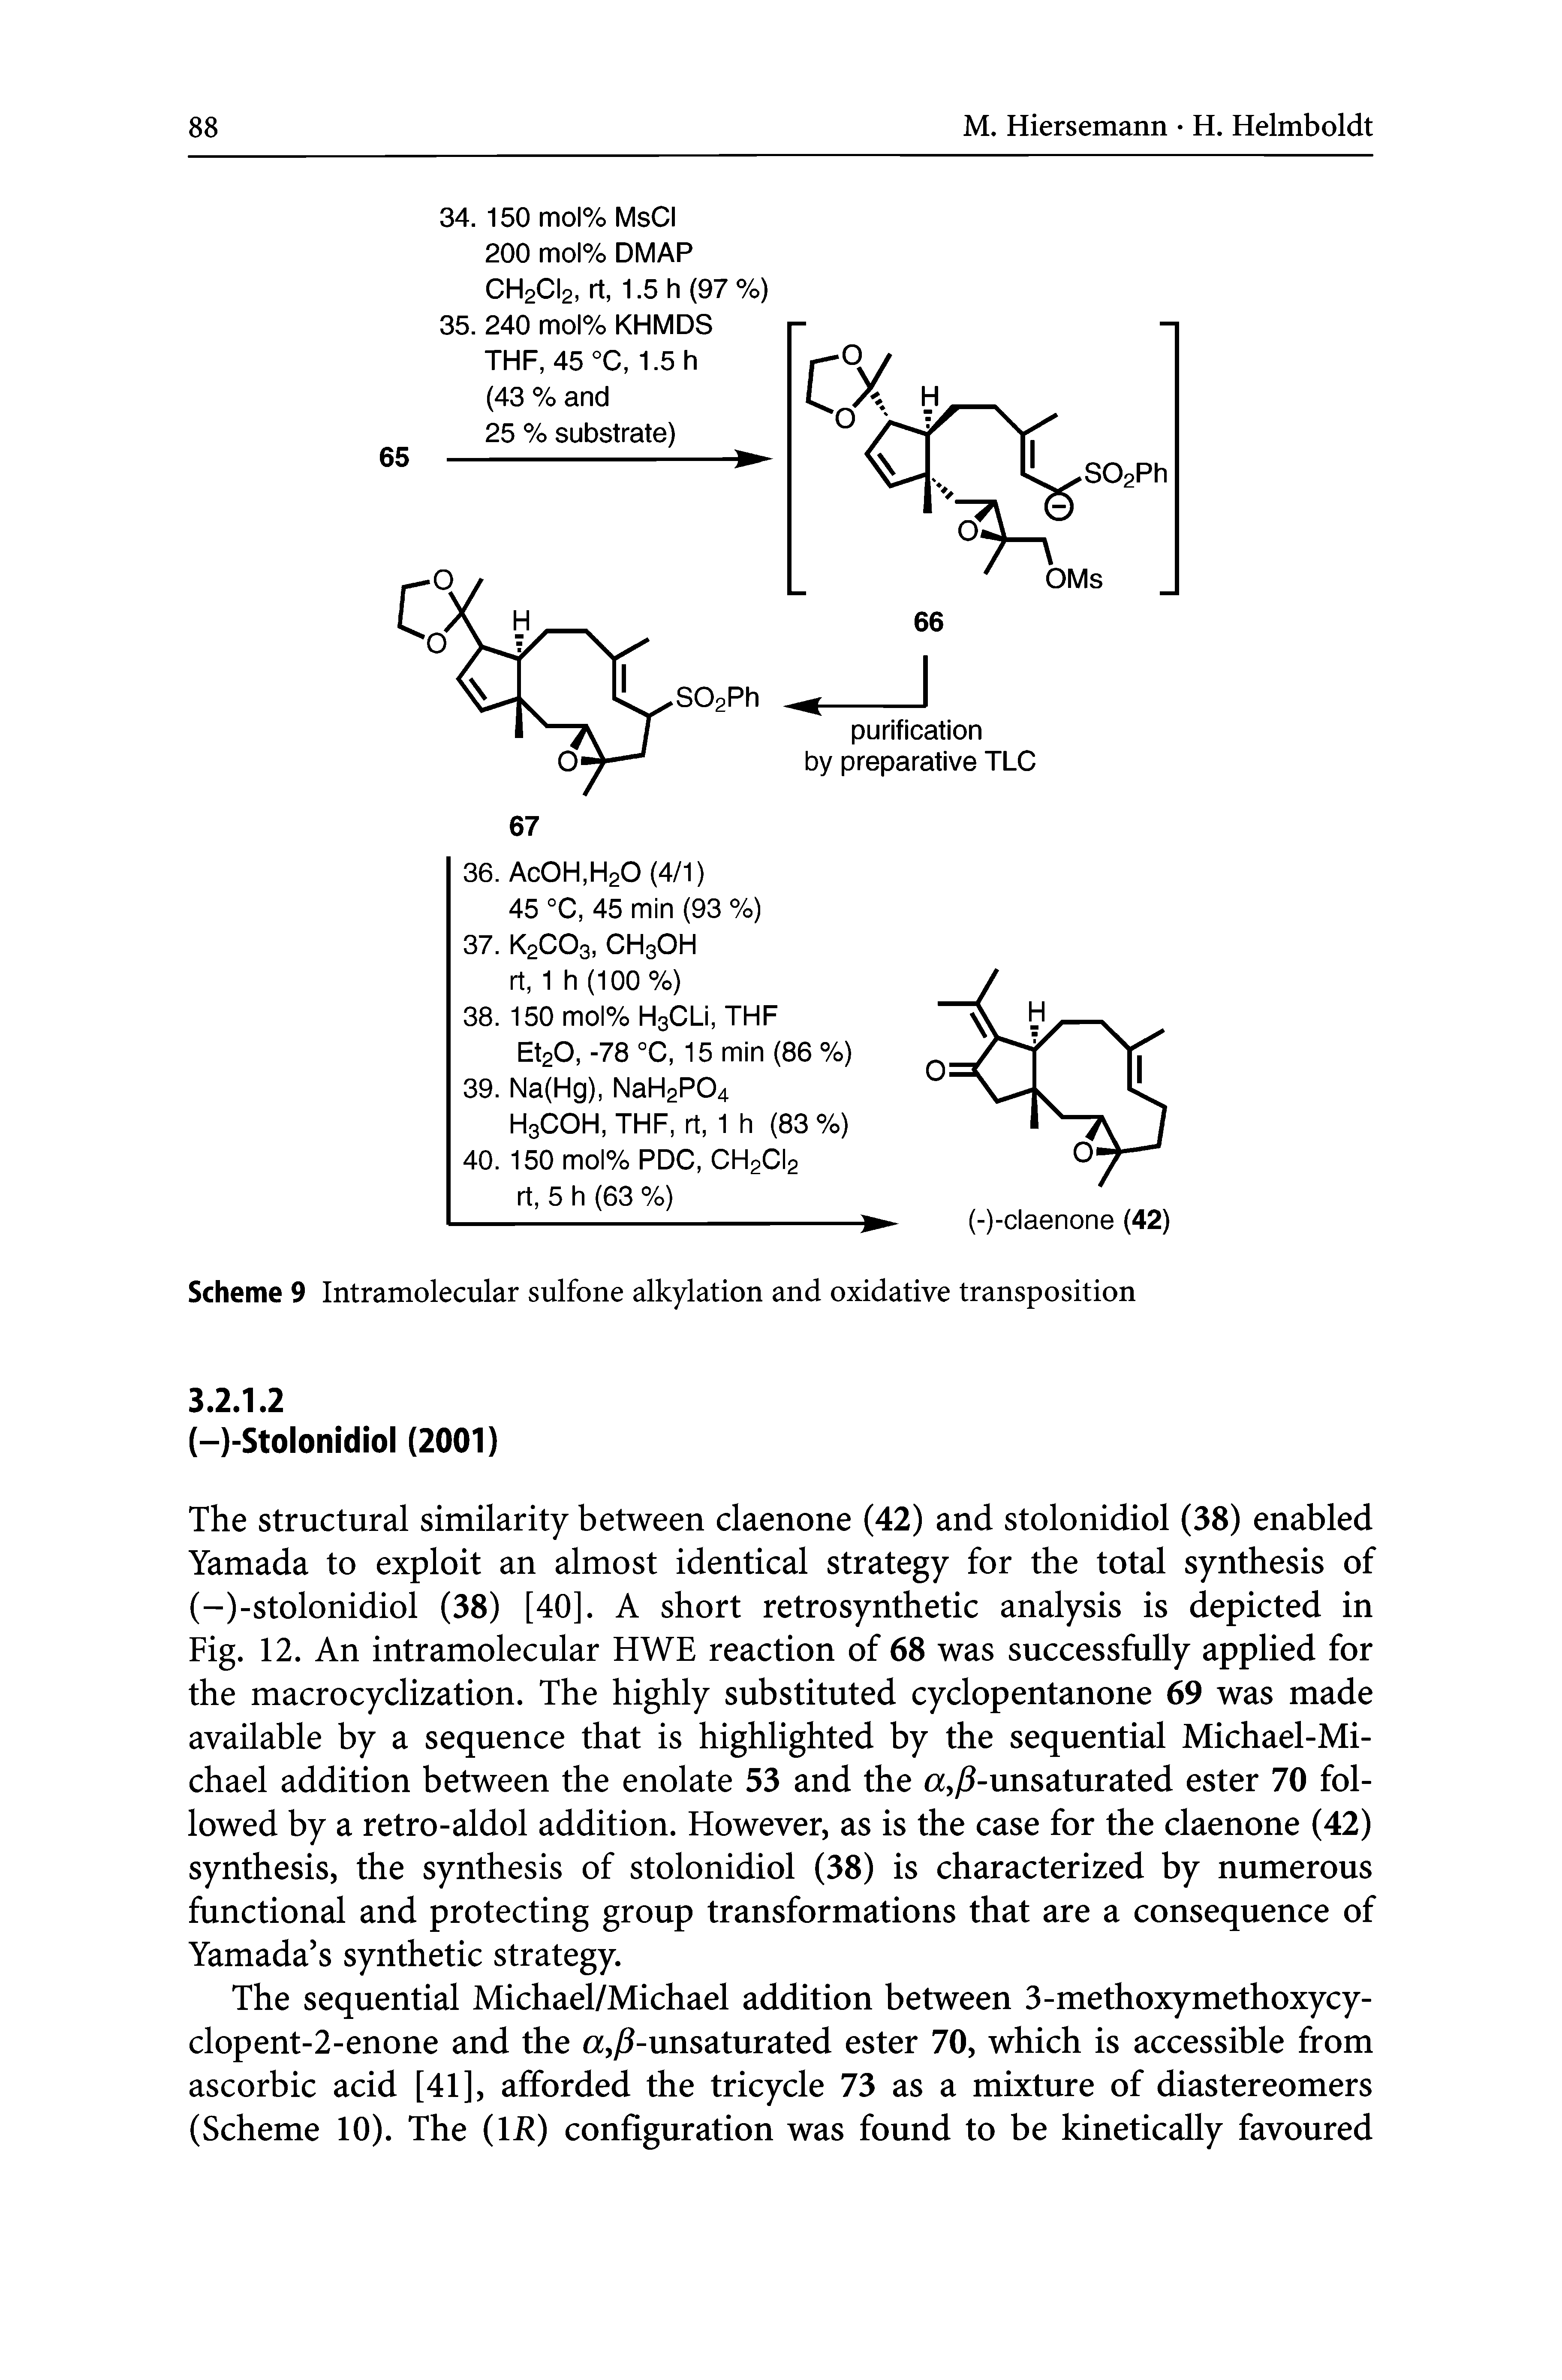 Scheme 9 Intramolecular sulfone alkylation and oxidative transposition...